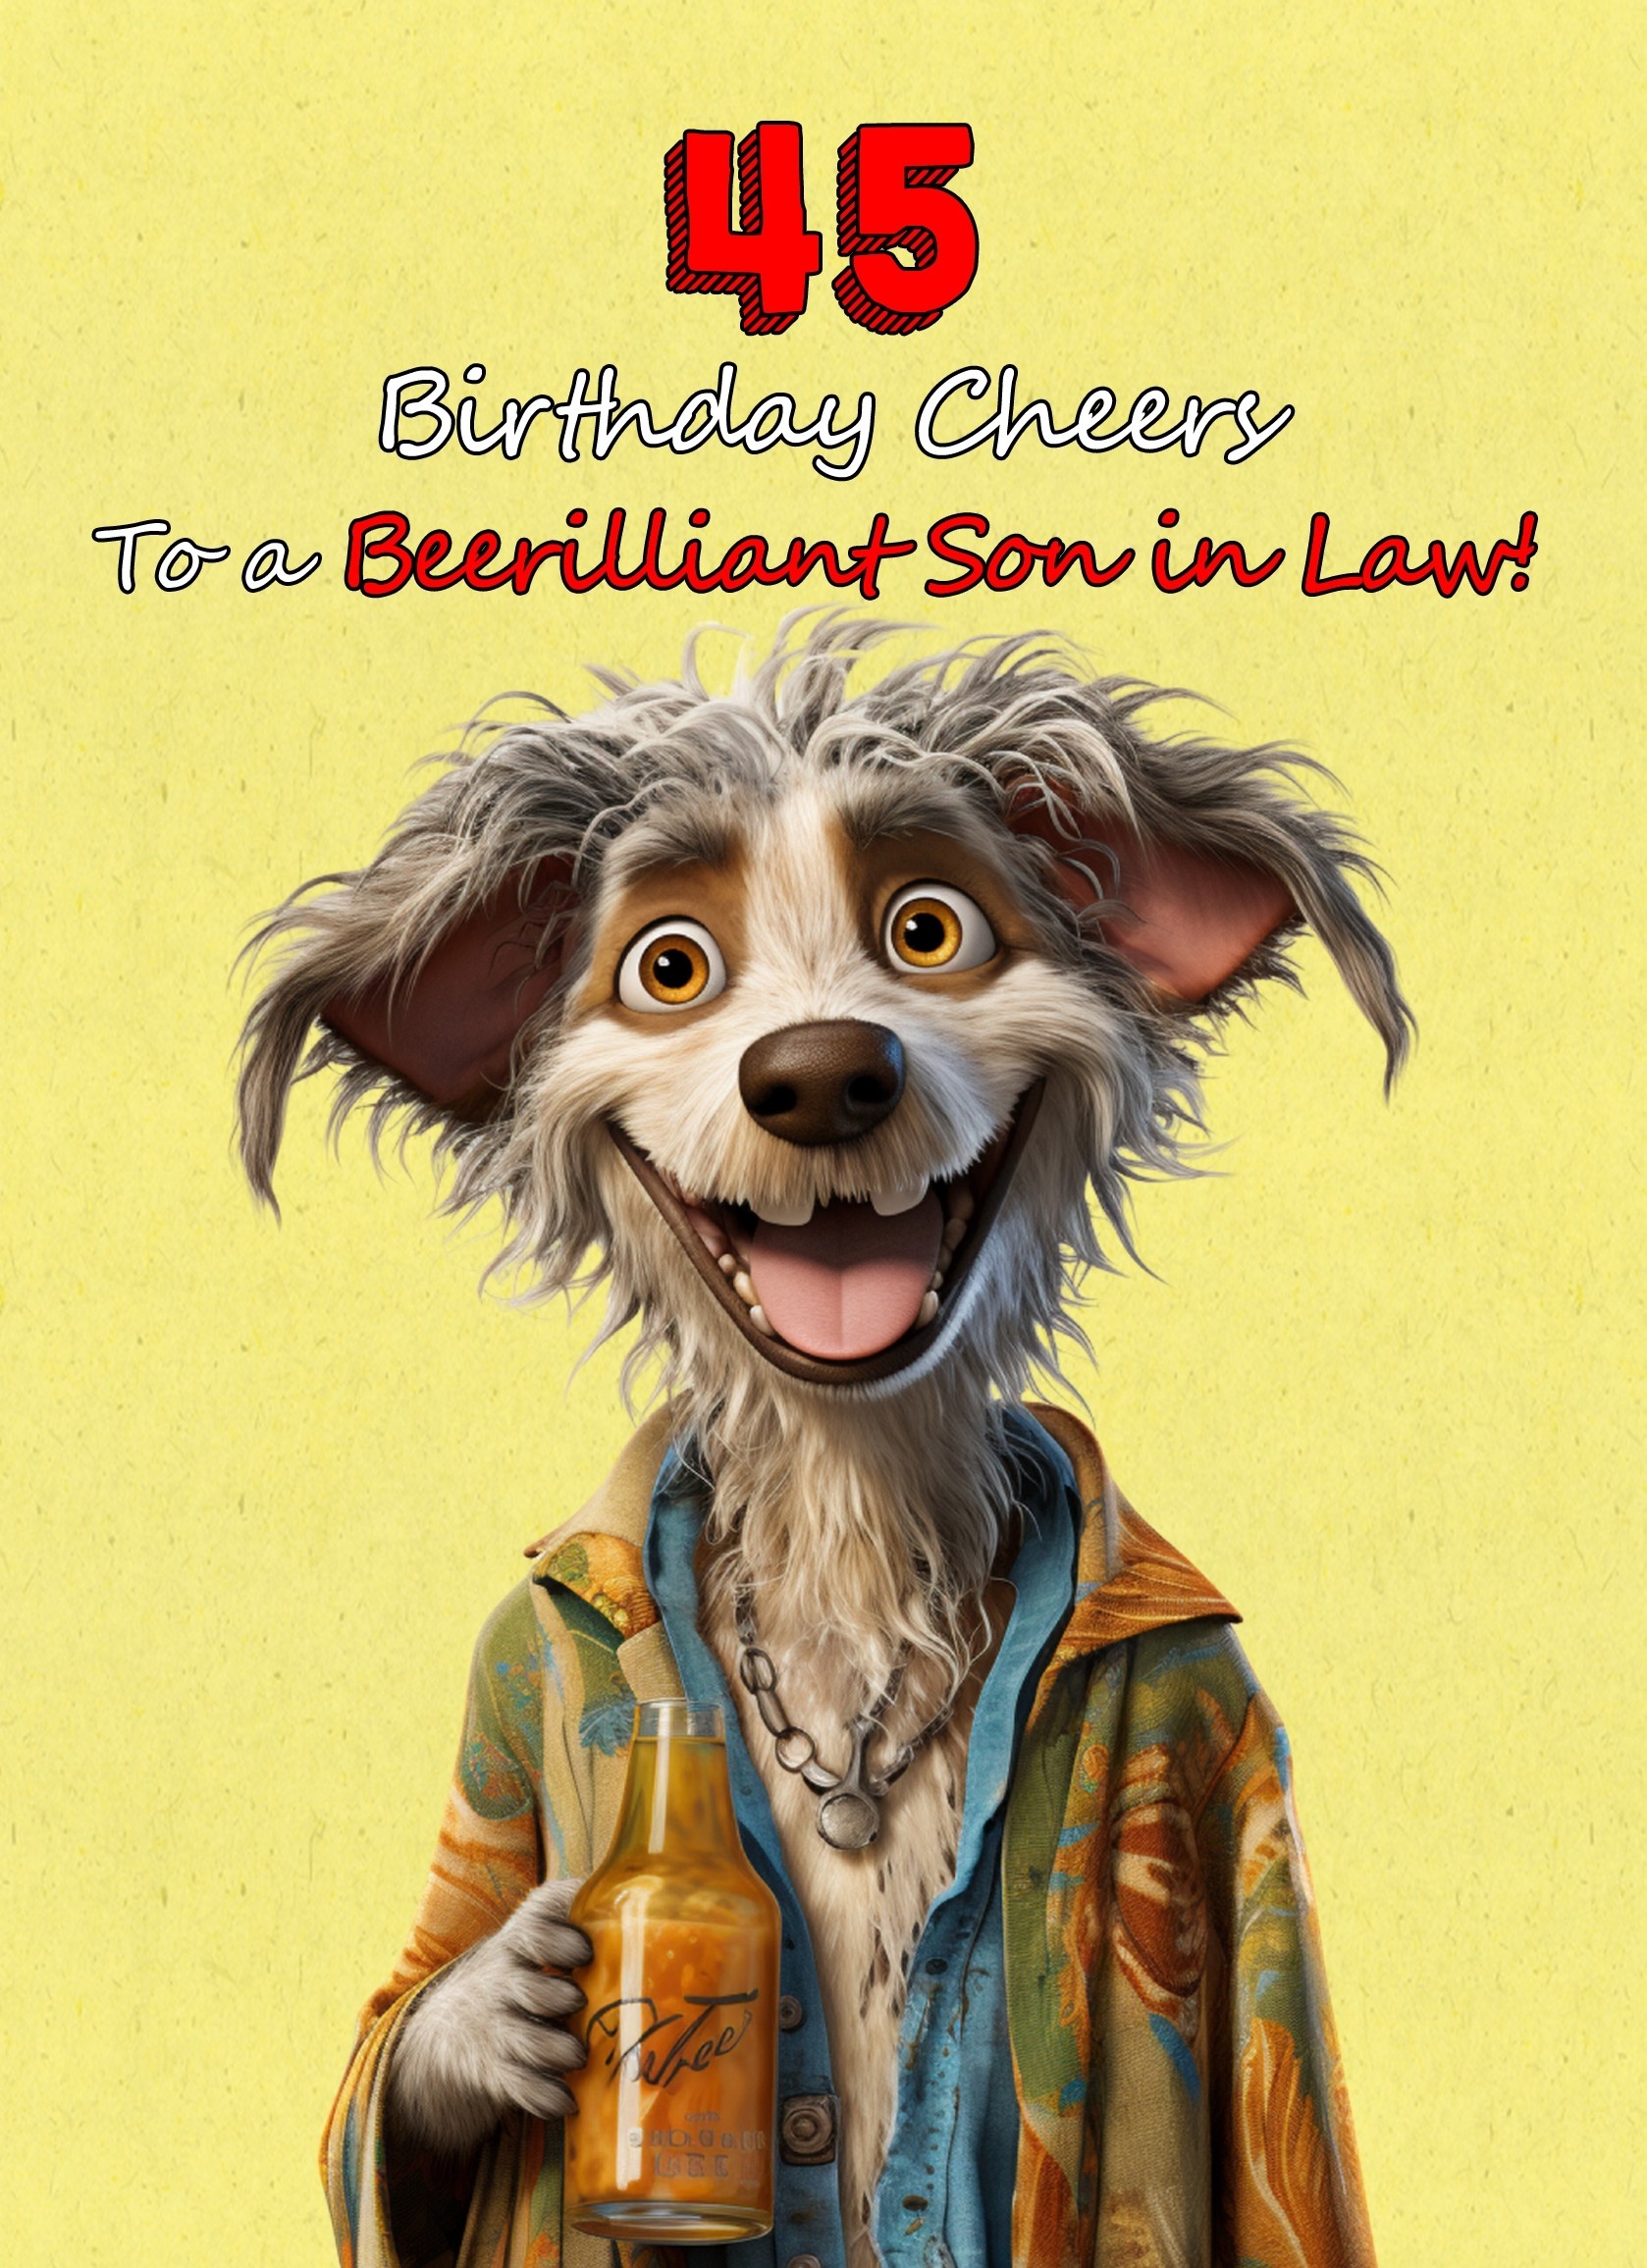 Son in Law 45th Birthday Card (Funny Beerilliant Birthday Cheers, Design 2)